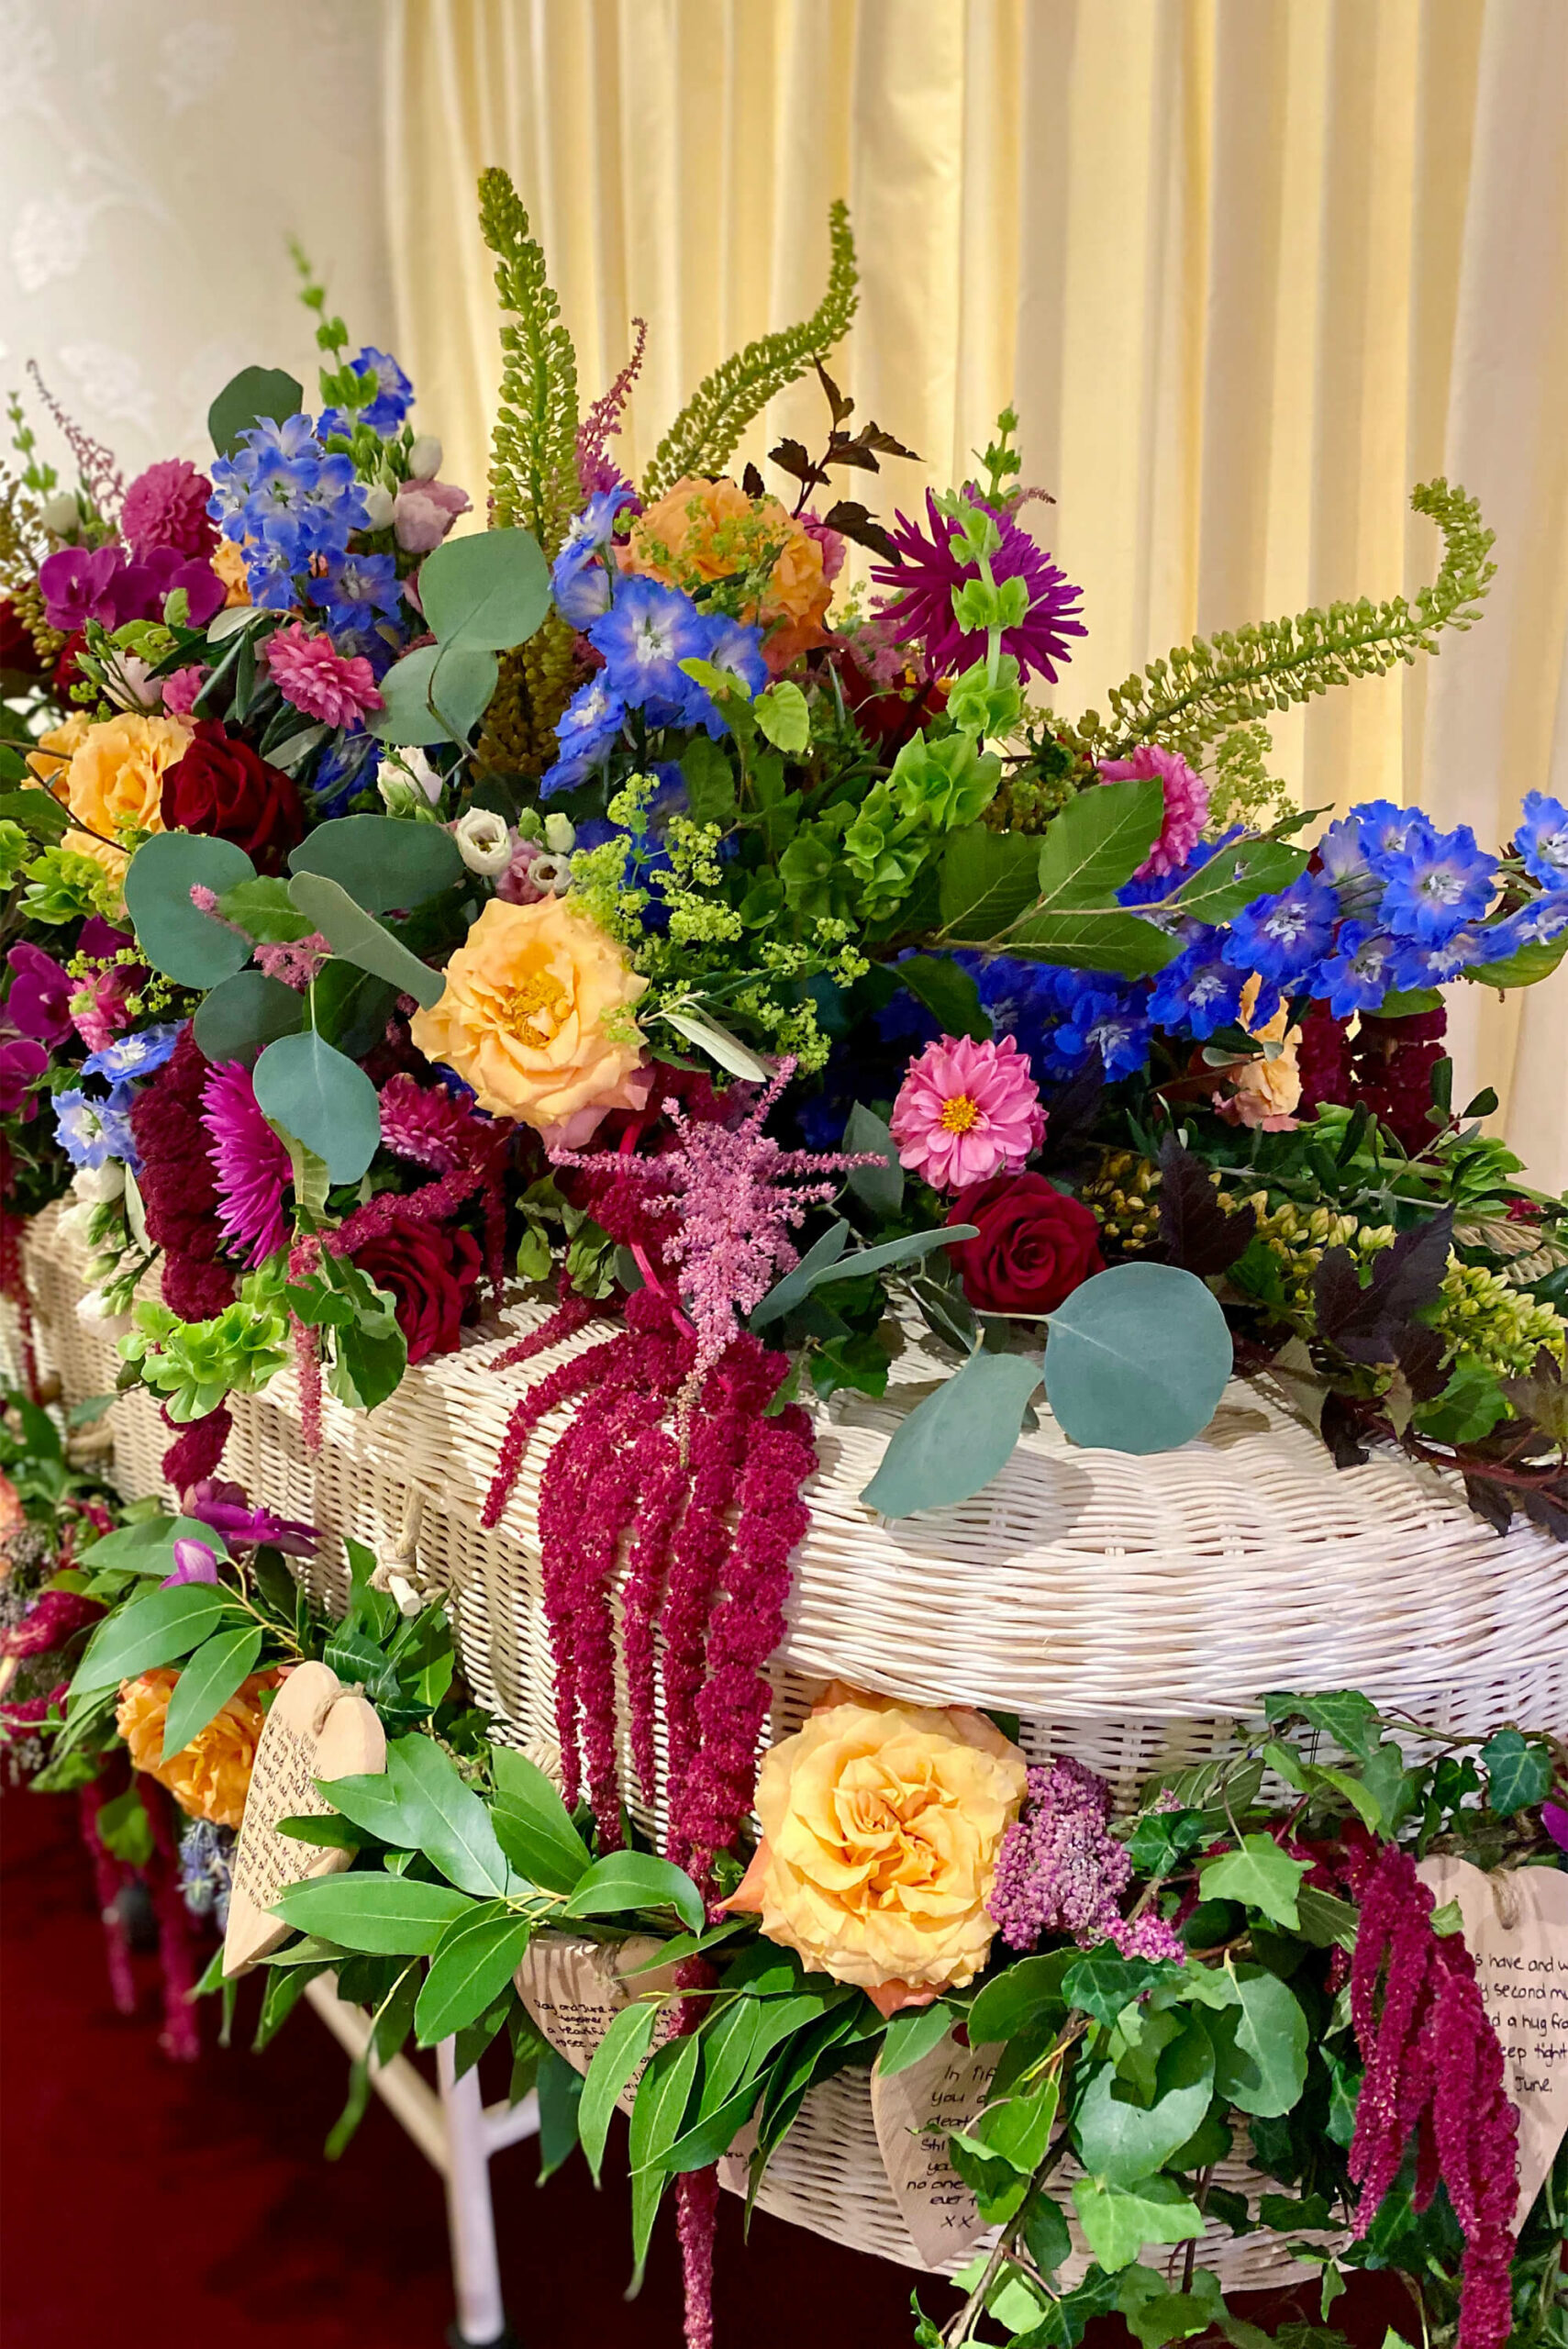 Whicker casket floral arrangement